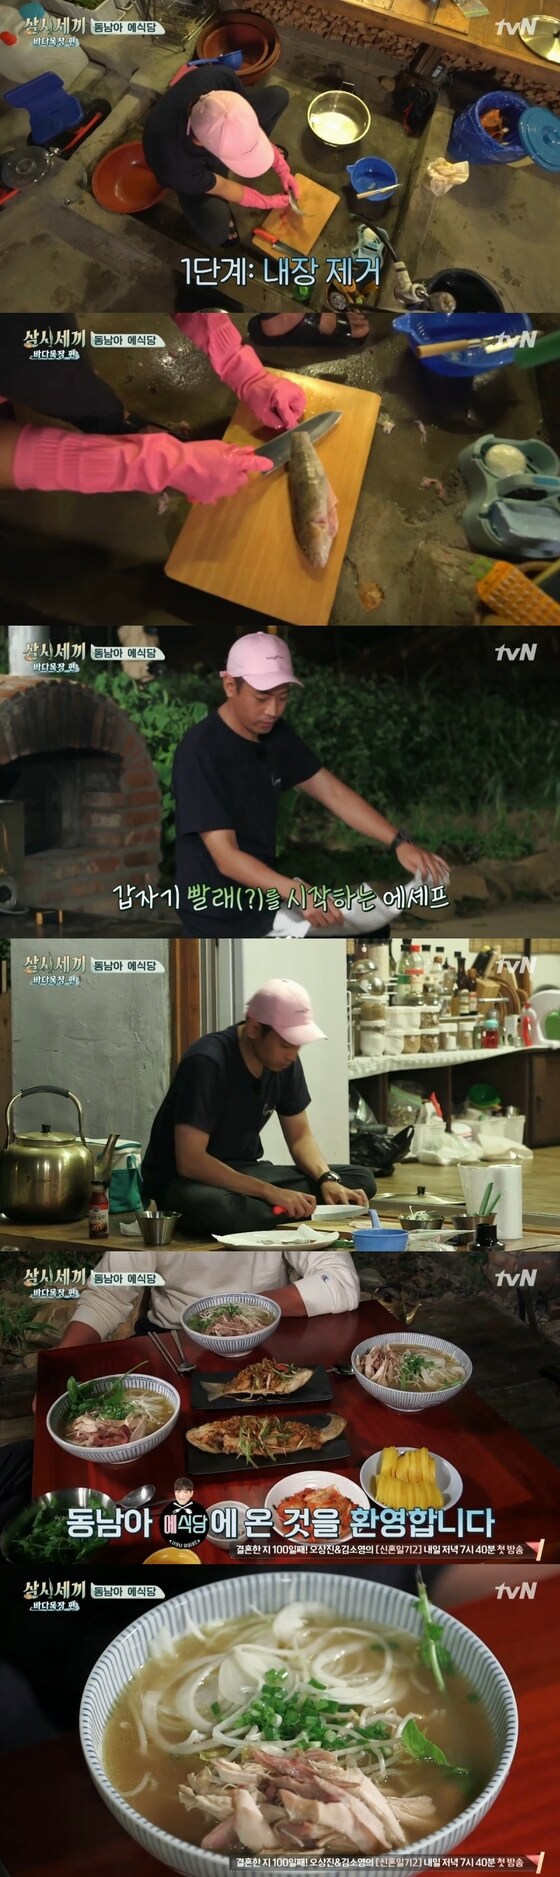 tvN '삼시세끼-바다목장 편' 캡처© News1